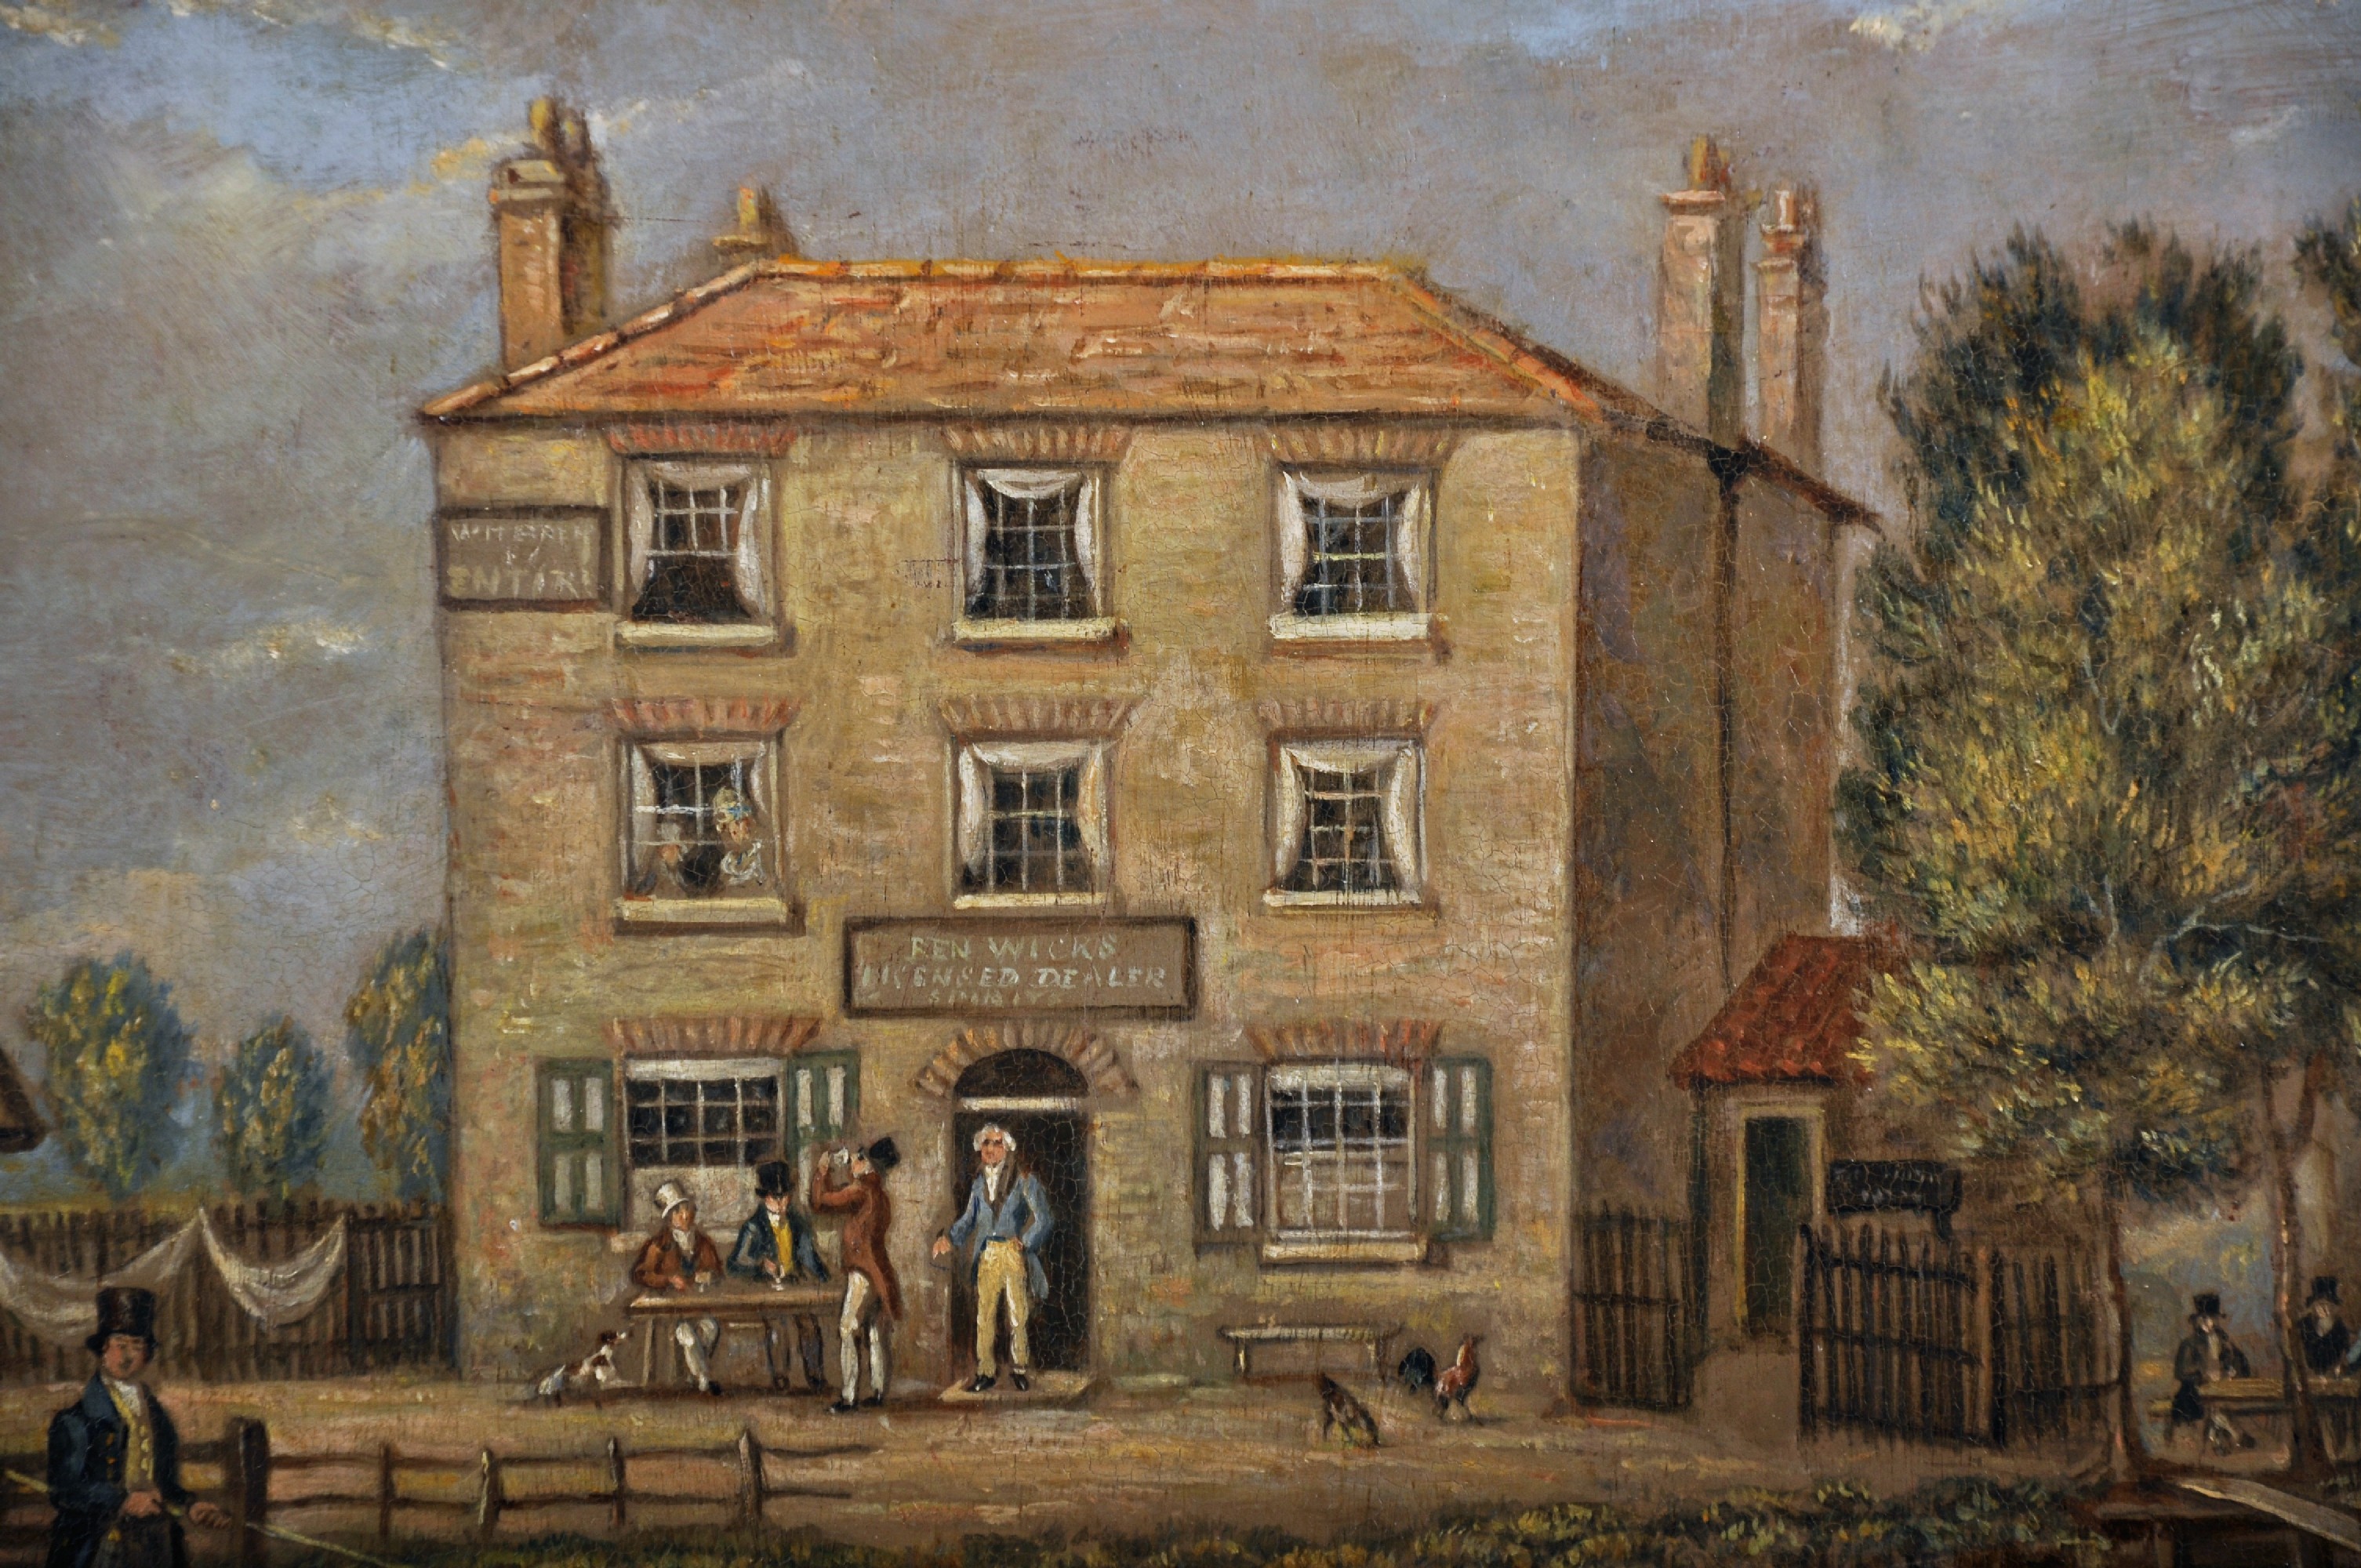 James Pollard (1792-1867) British. "Ben Wicks, Licensed Dealer Spirits", an Inn in a River - Image 4 of 7